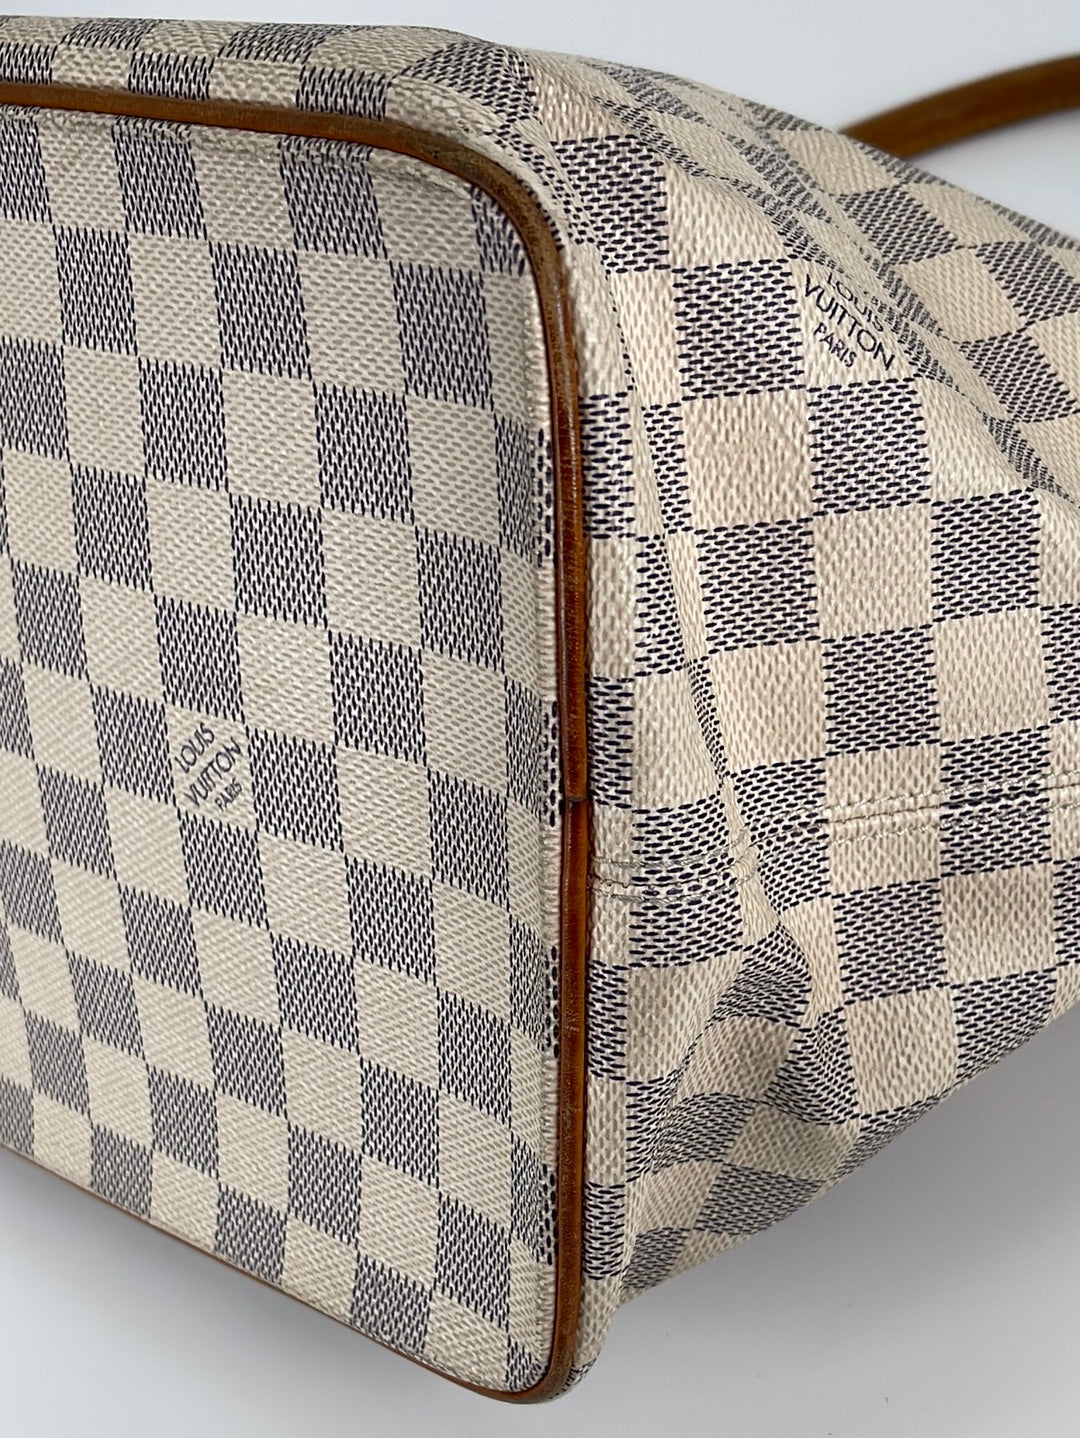 Louis Vuitton Damier Azur Saleya MM Zip Tote Bag 87lz56s